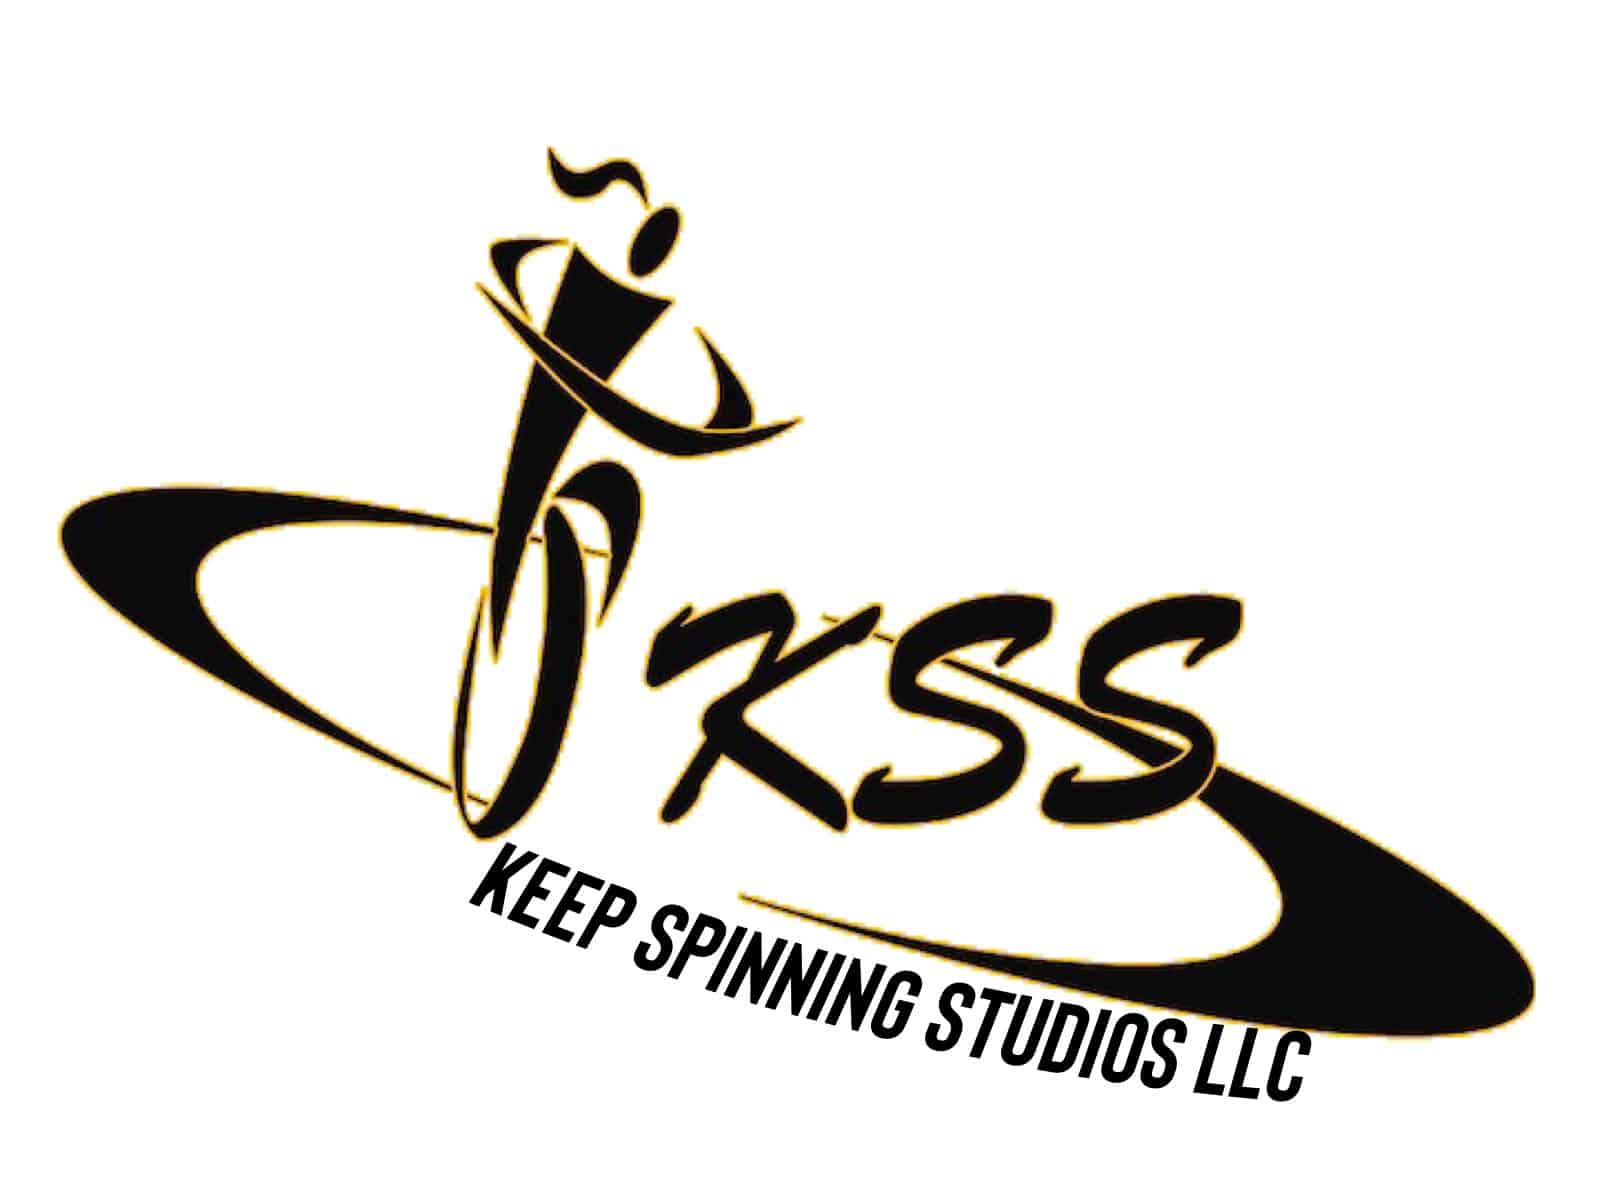 Keep Spinning Studios